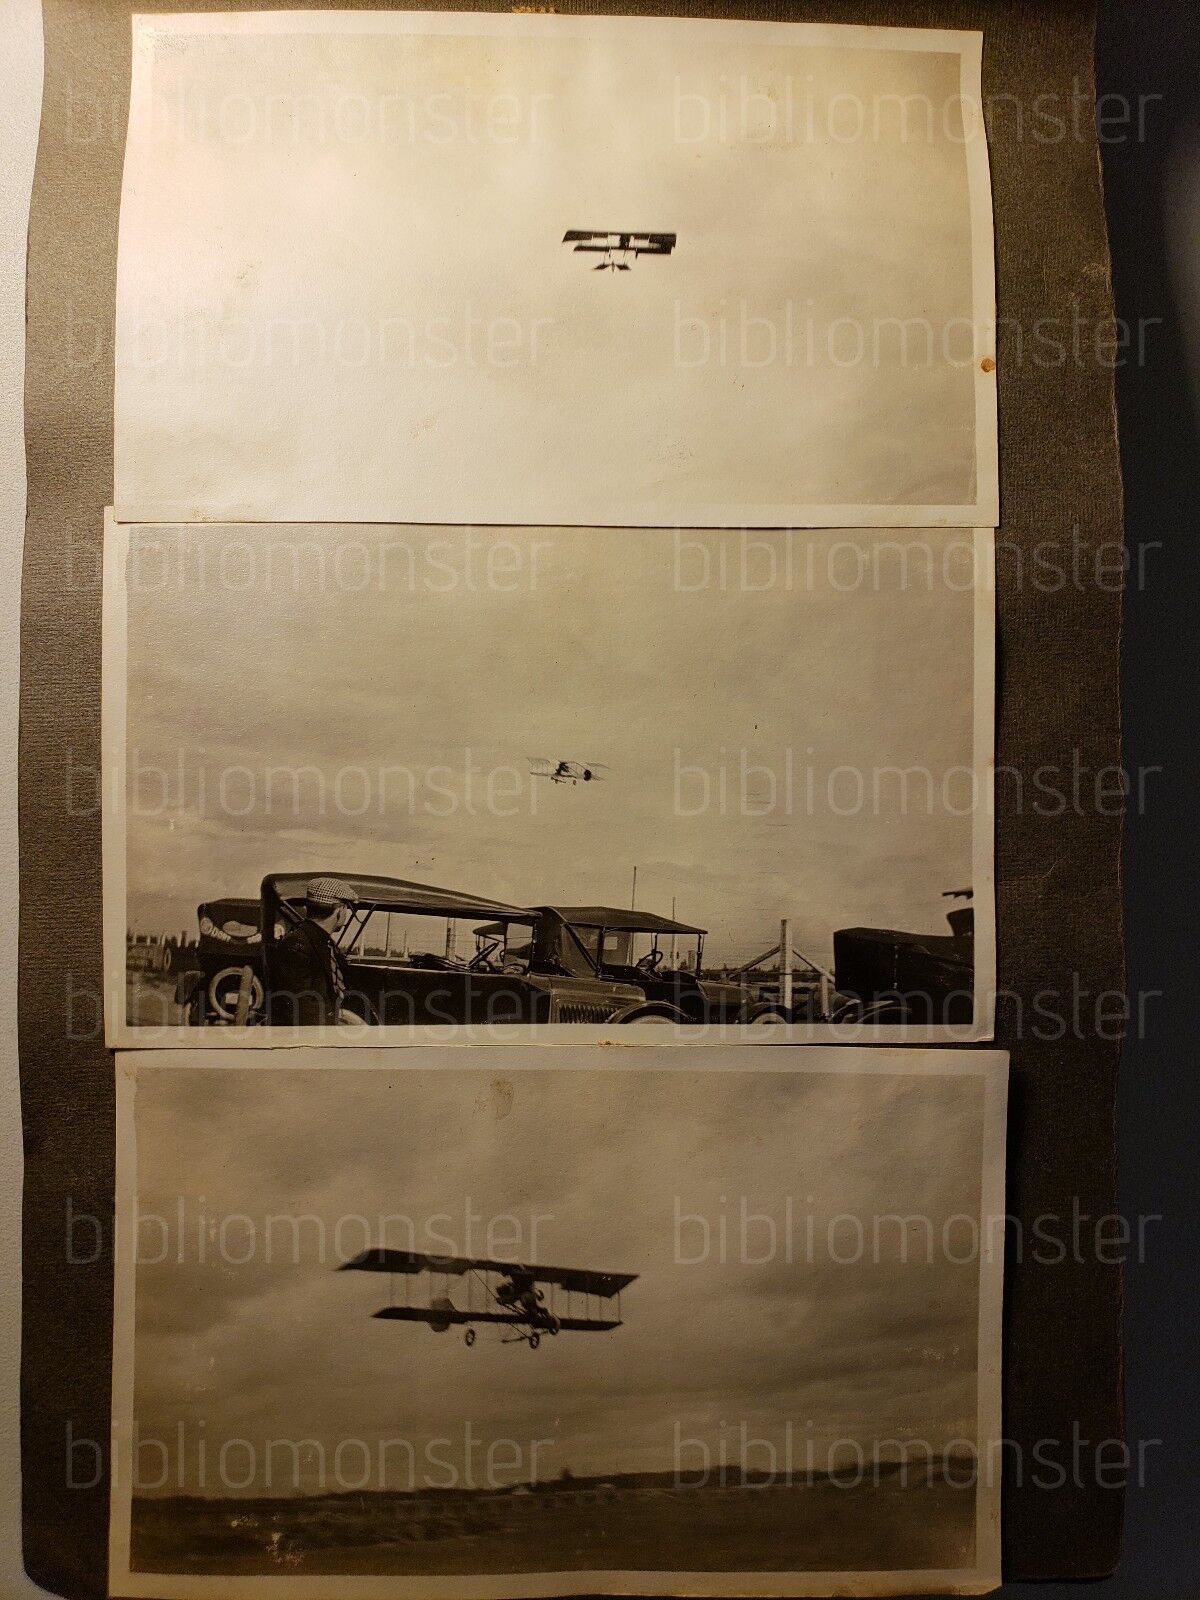 1916 BOEING 1ST TEST PILOT AVIATION PHOTO ALBUM HERB MUNTER SEATTLE WA AIRCRAFT